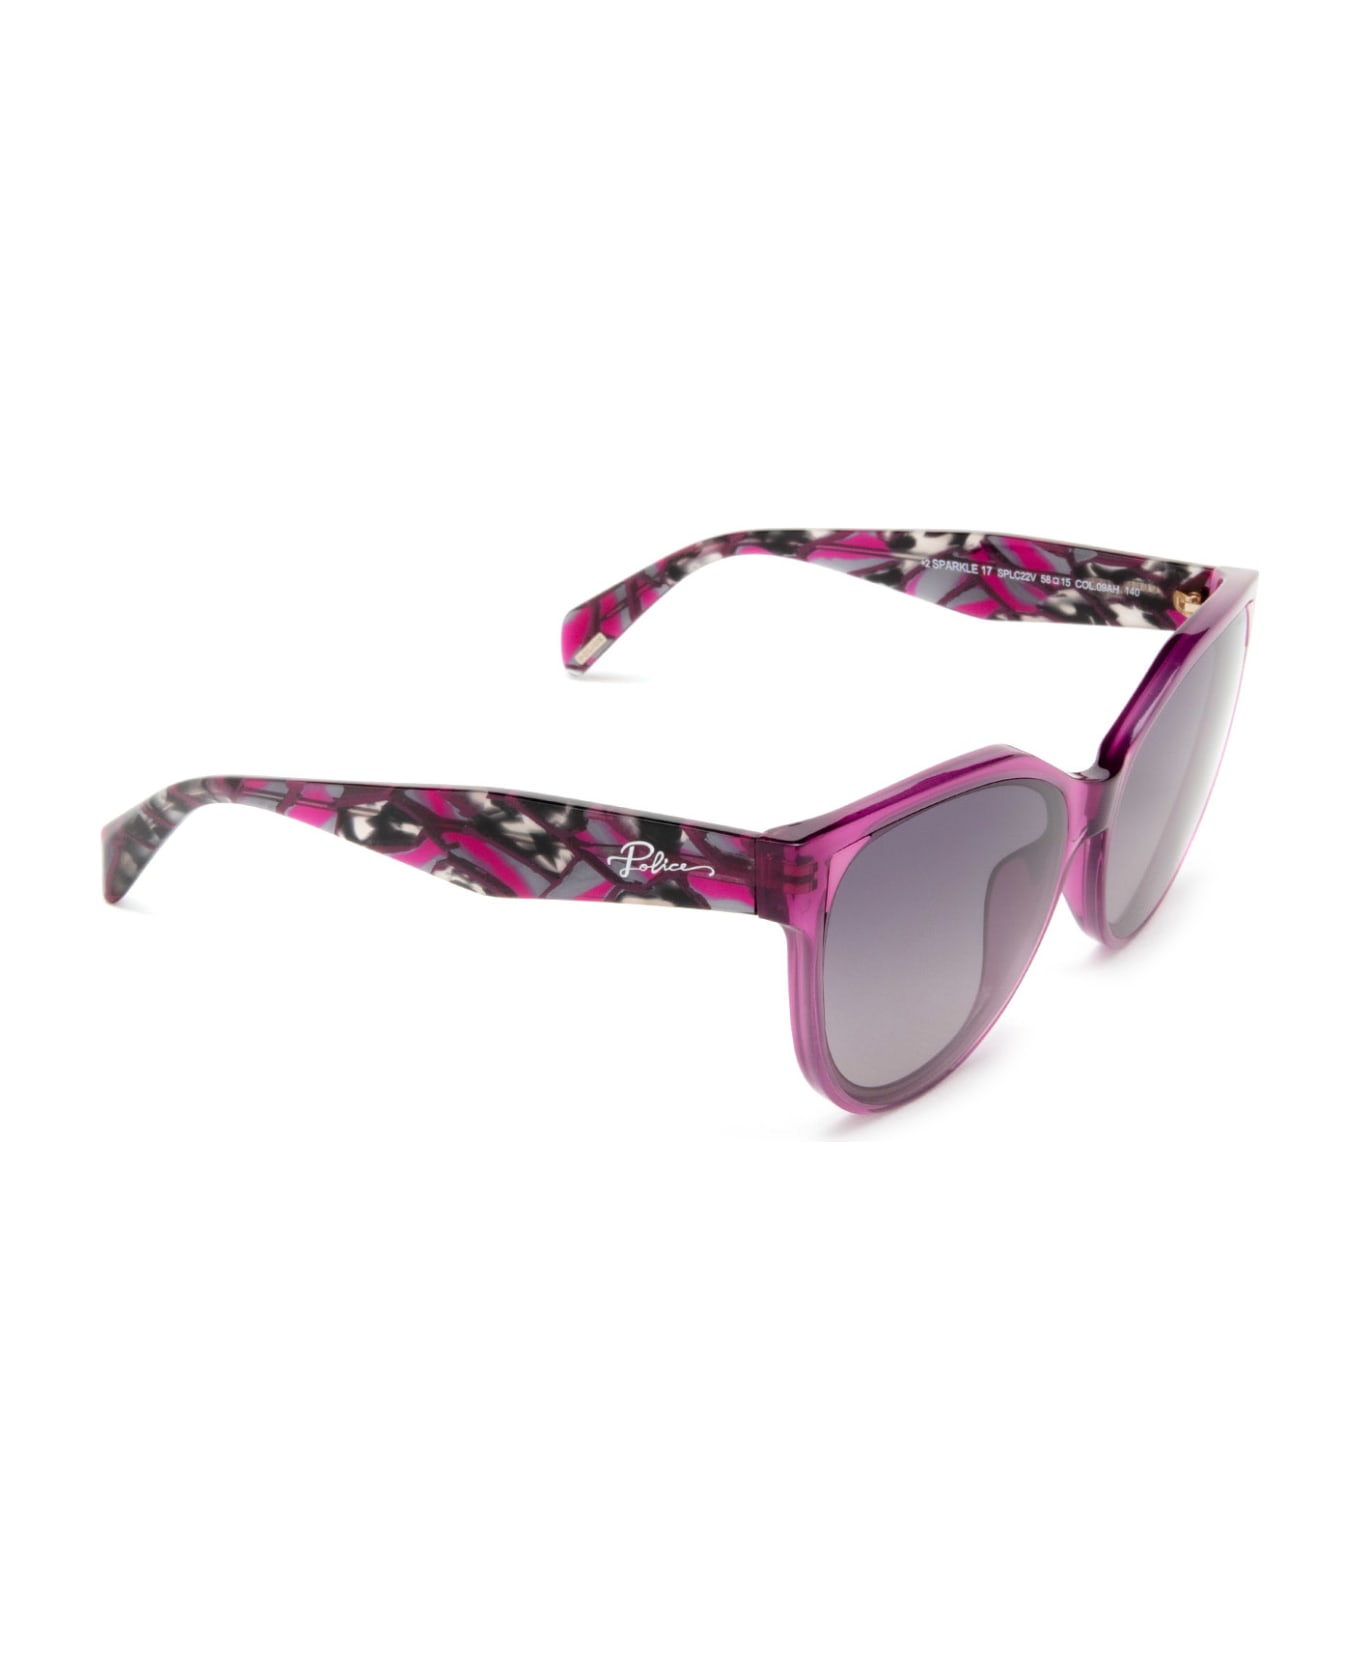 Police Splc22e Transparent Pink Sunglasses - Transparent Pink サングラス